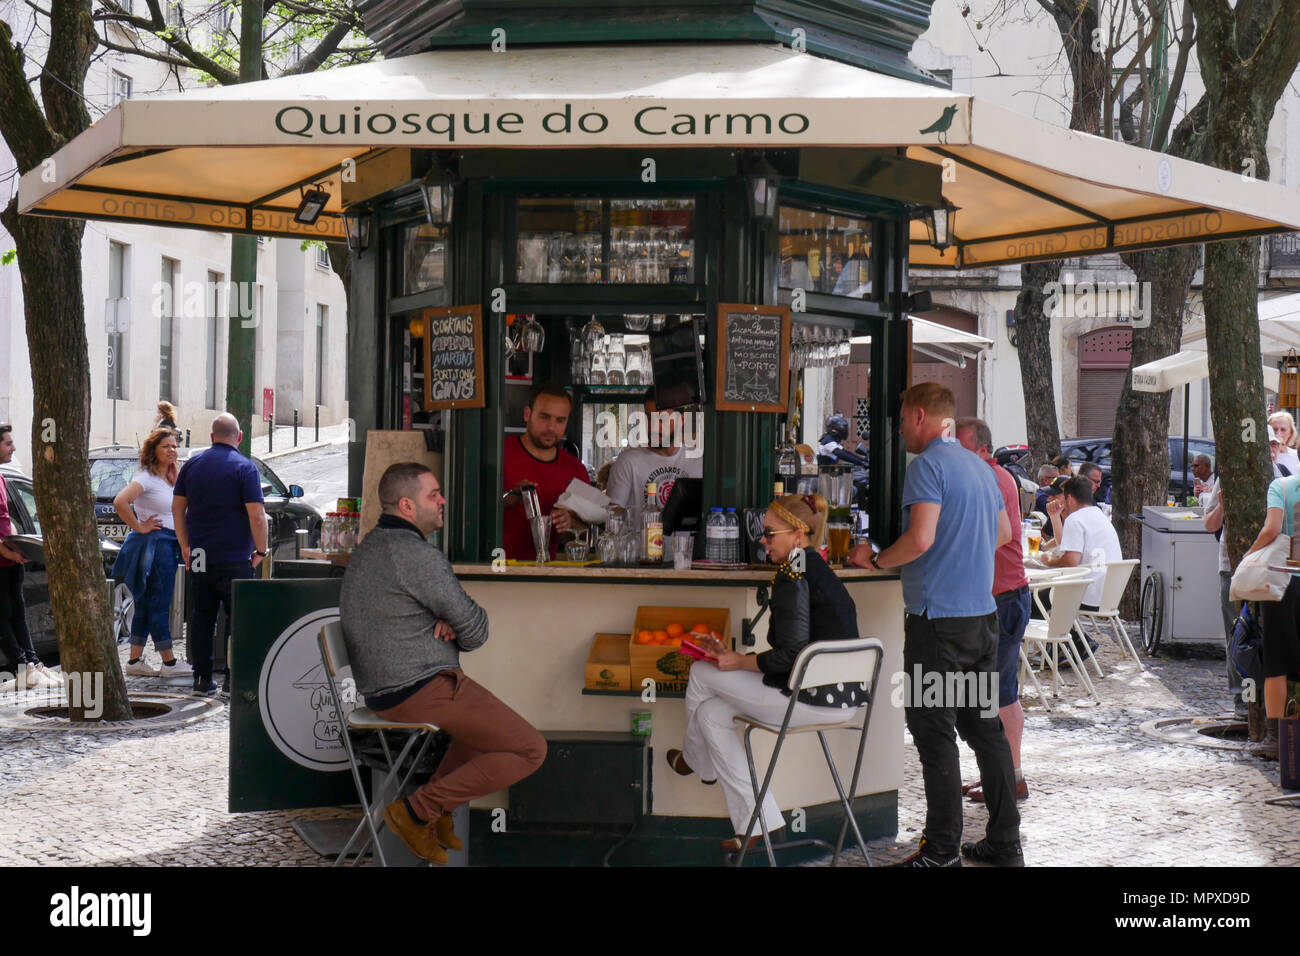 Quiosque do Carmo, a Small café at Carmes square, Lisbon, Portugal Stock Photo